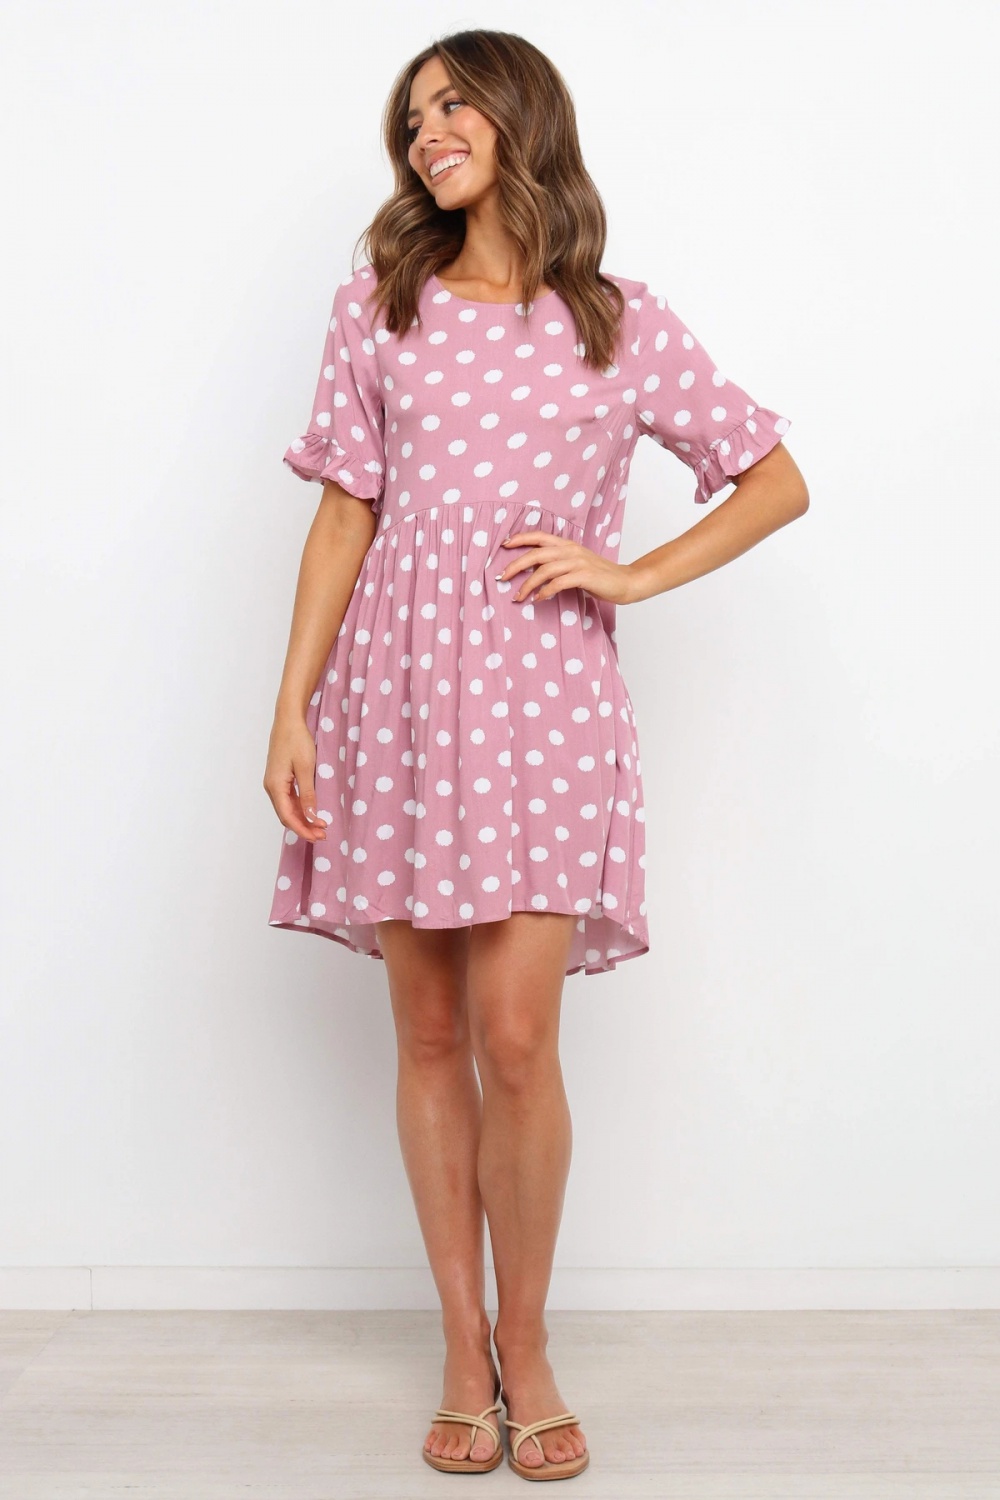 Round neck polka dot printing dress